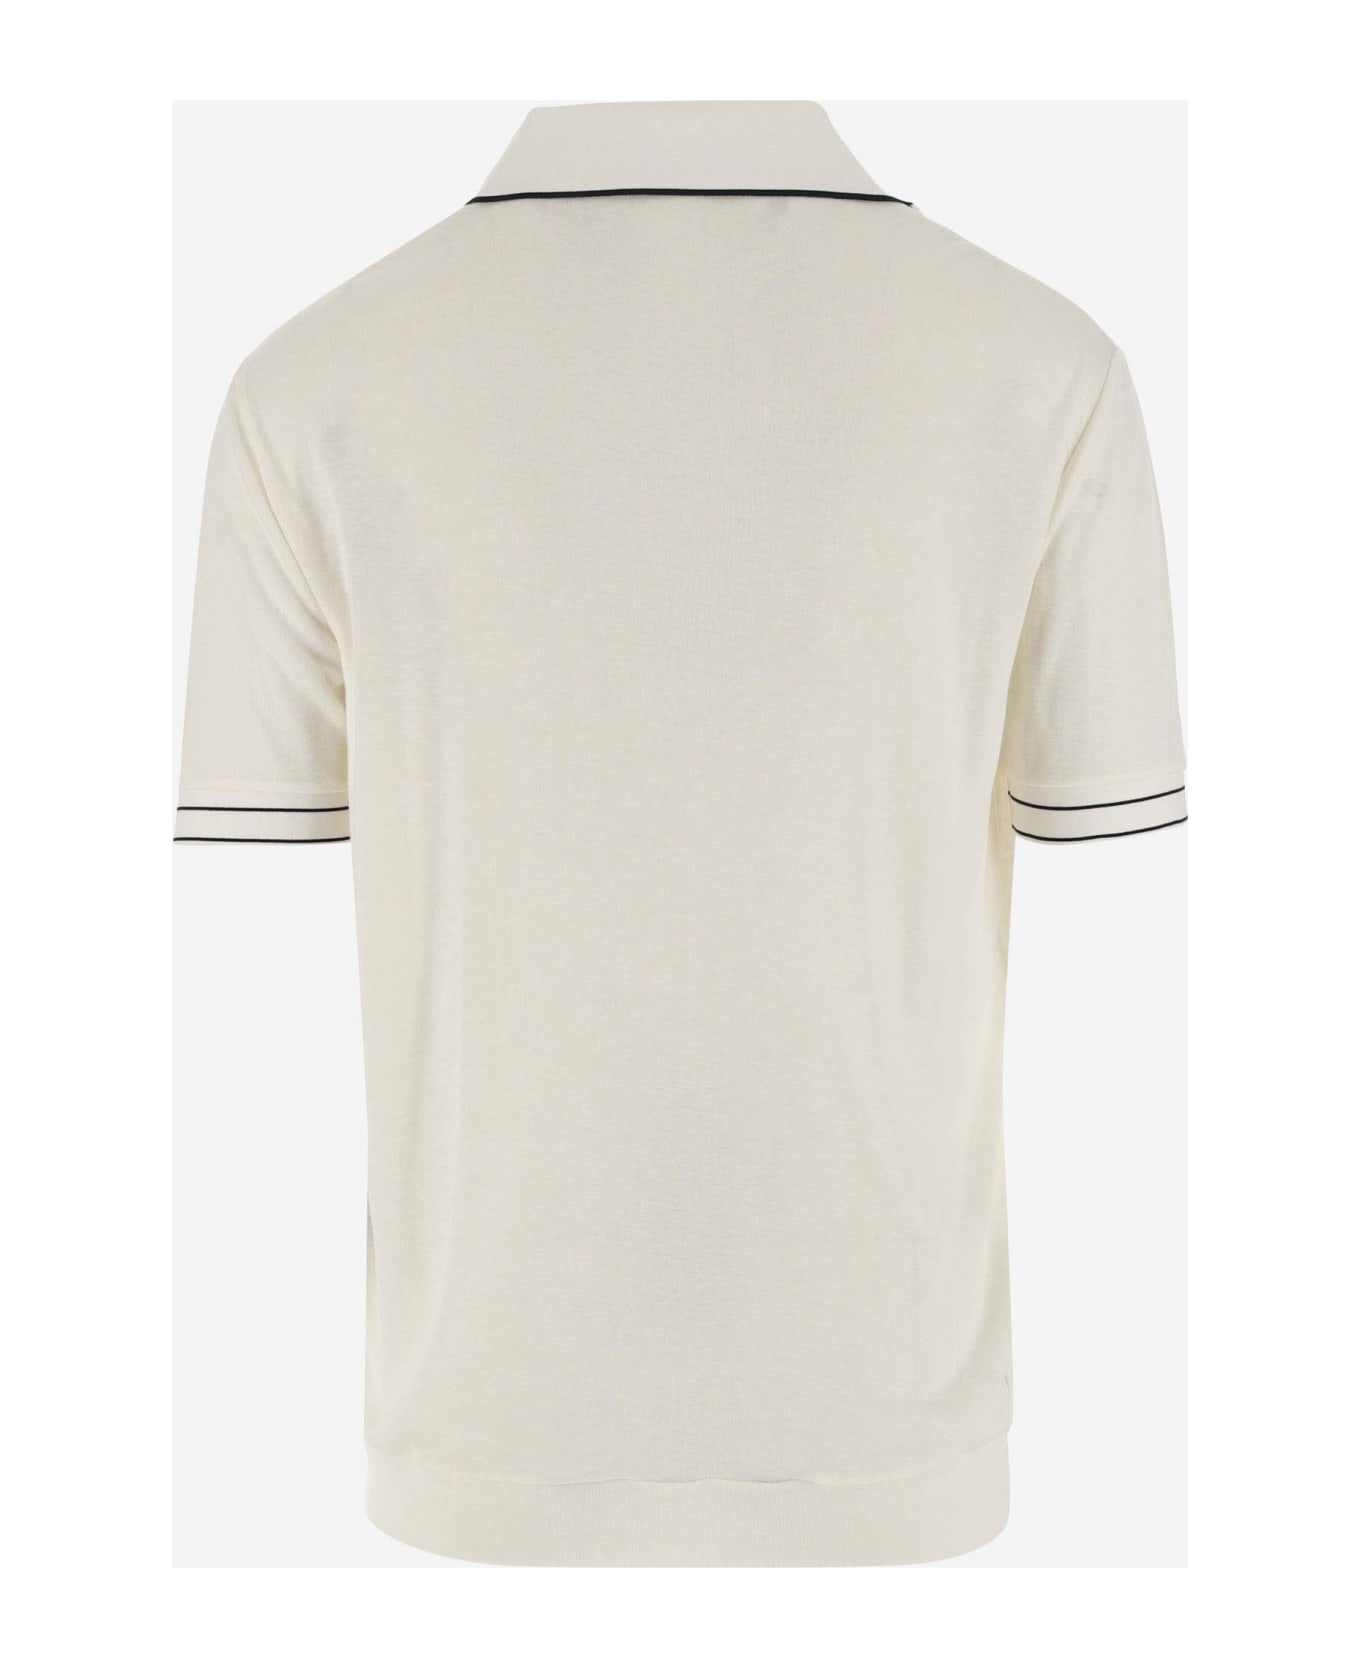 Giorgio Armani Wool And Viscose Blend Polo Shirt - Gesso